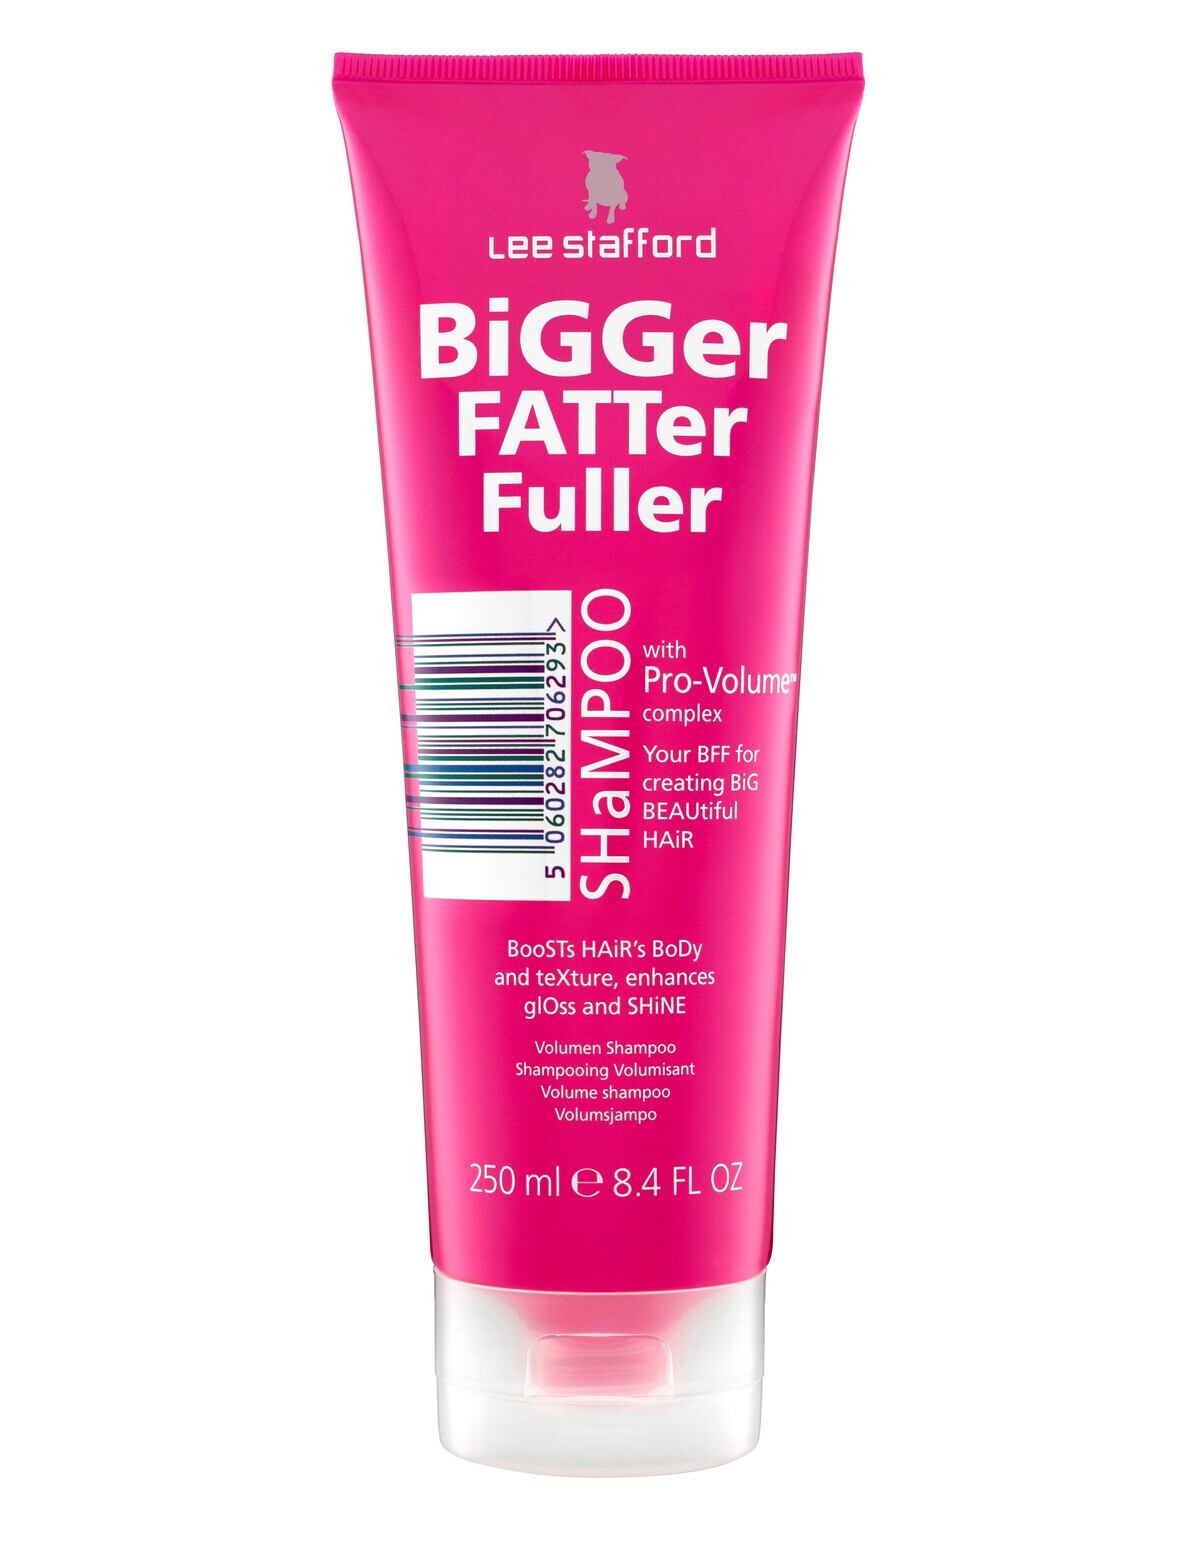 Lee Stafford Bigger Fatter Fuller Shampoo, 250ml - Hair Care & Brushes